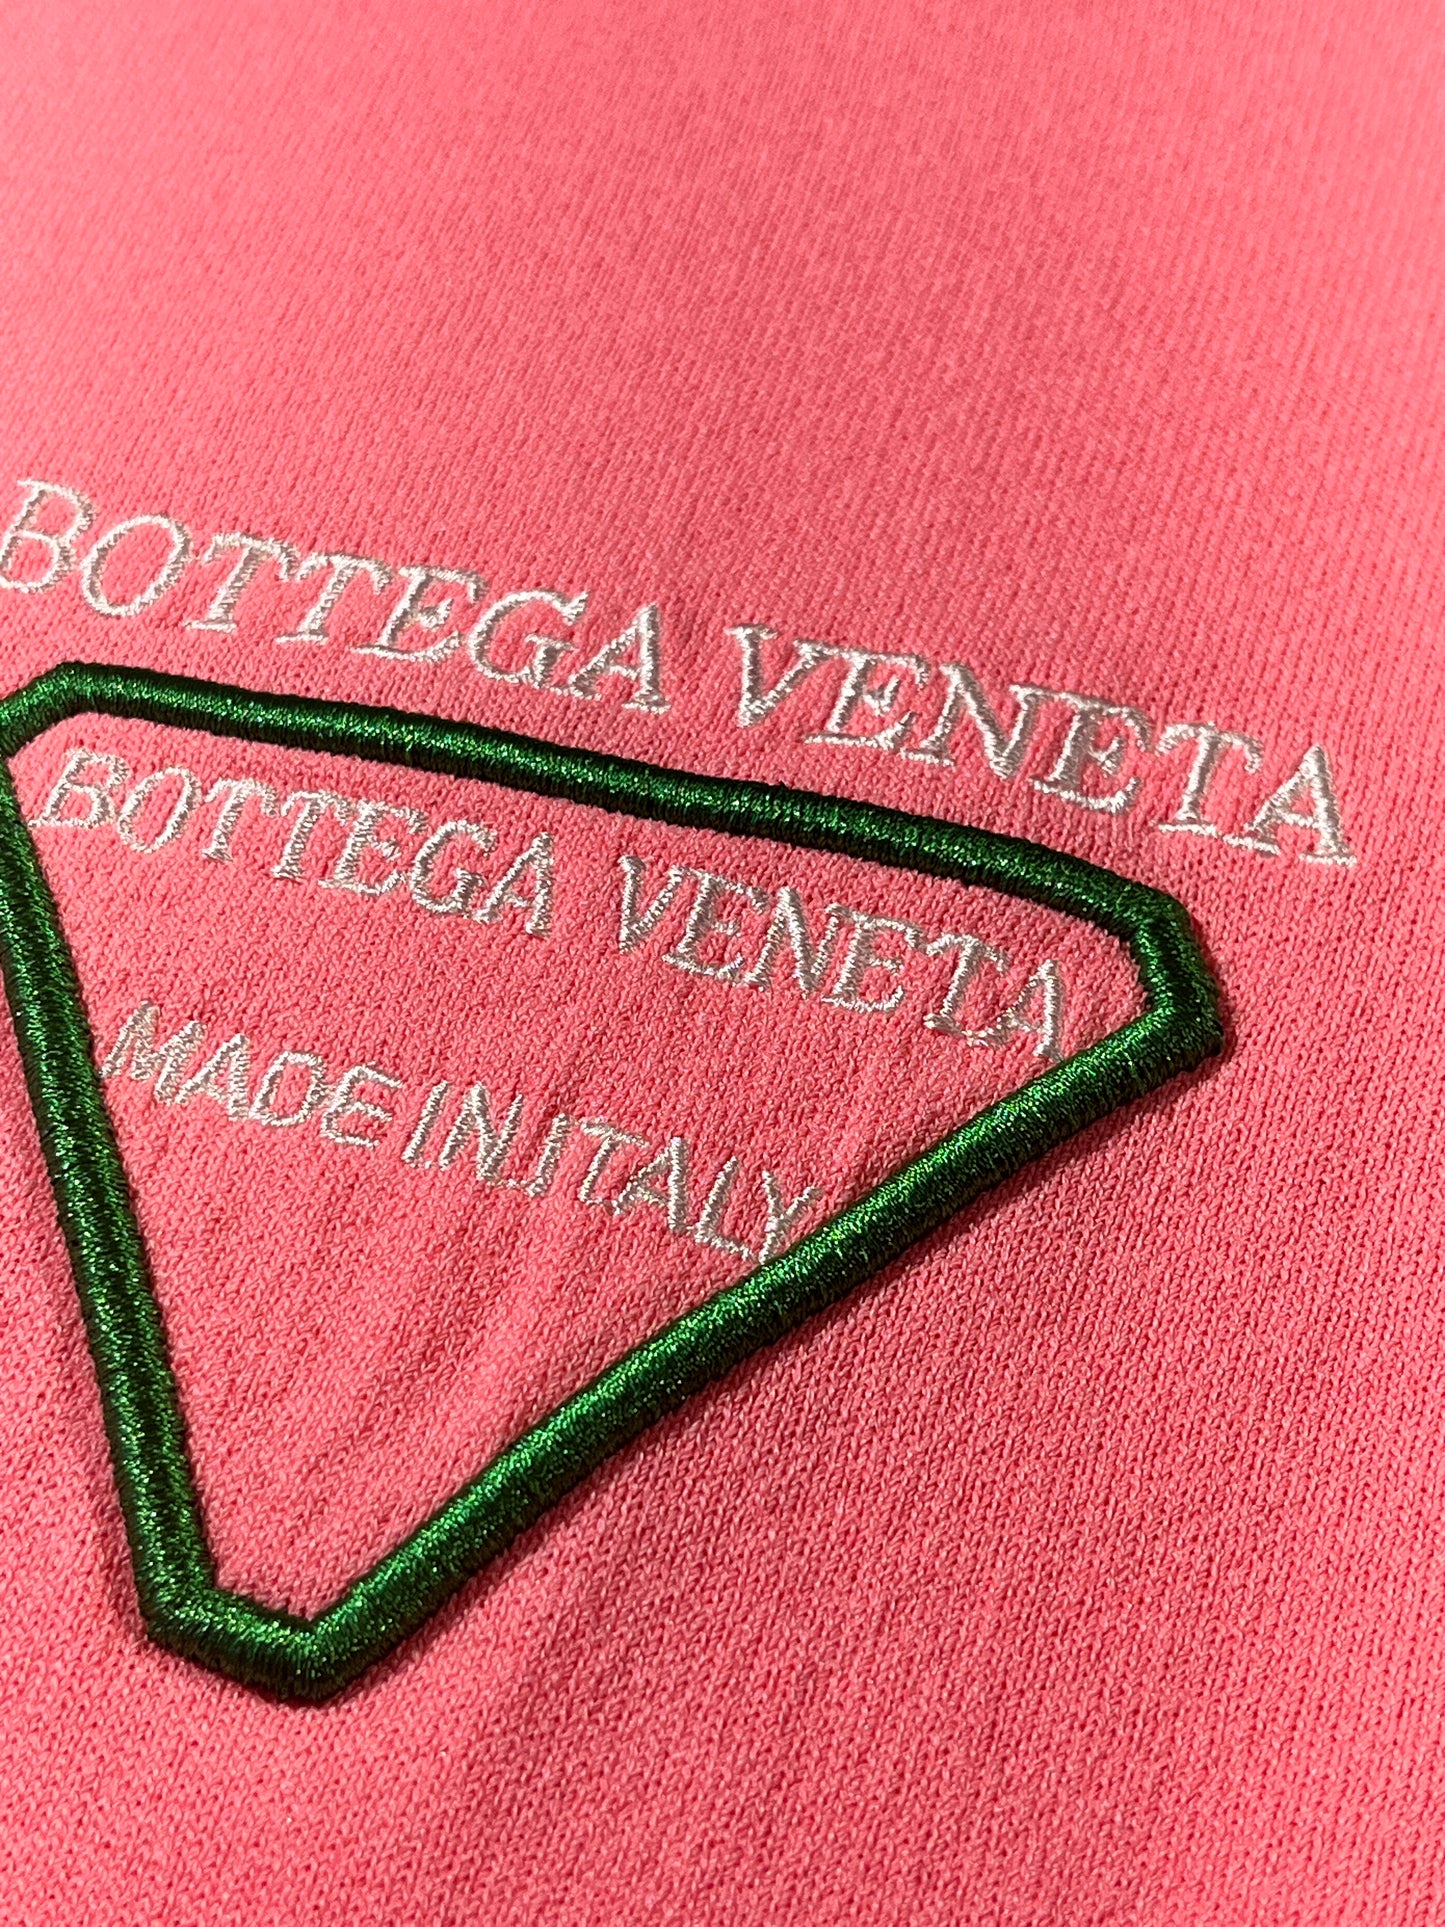 Vintage Bottega Veneta Top Fall 2021 2022 Ringer Shirt Made In Italy